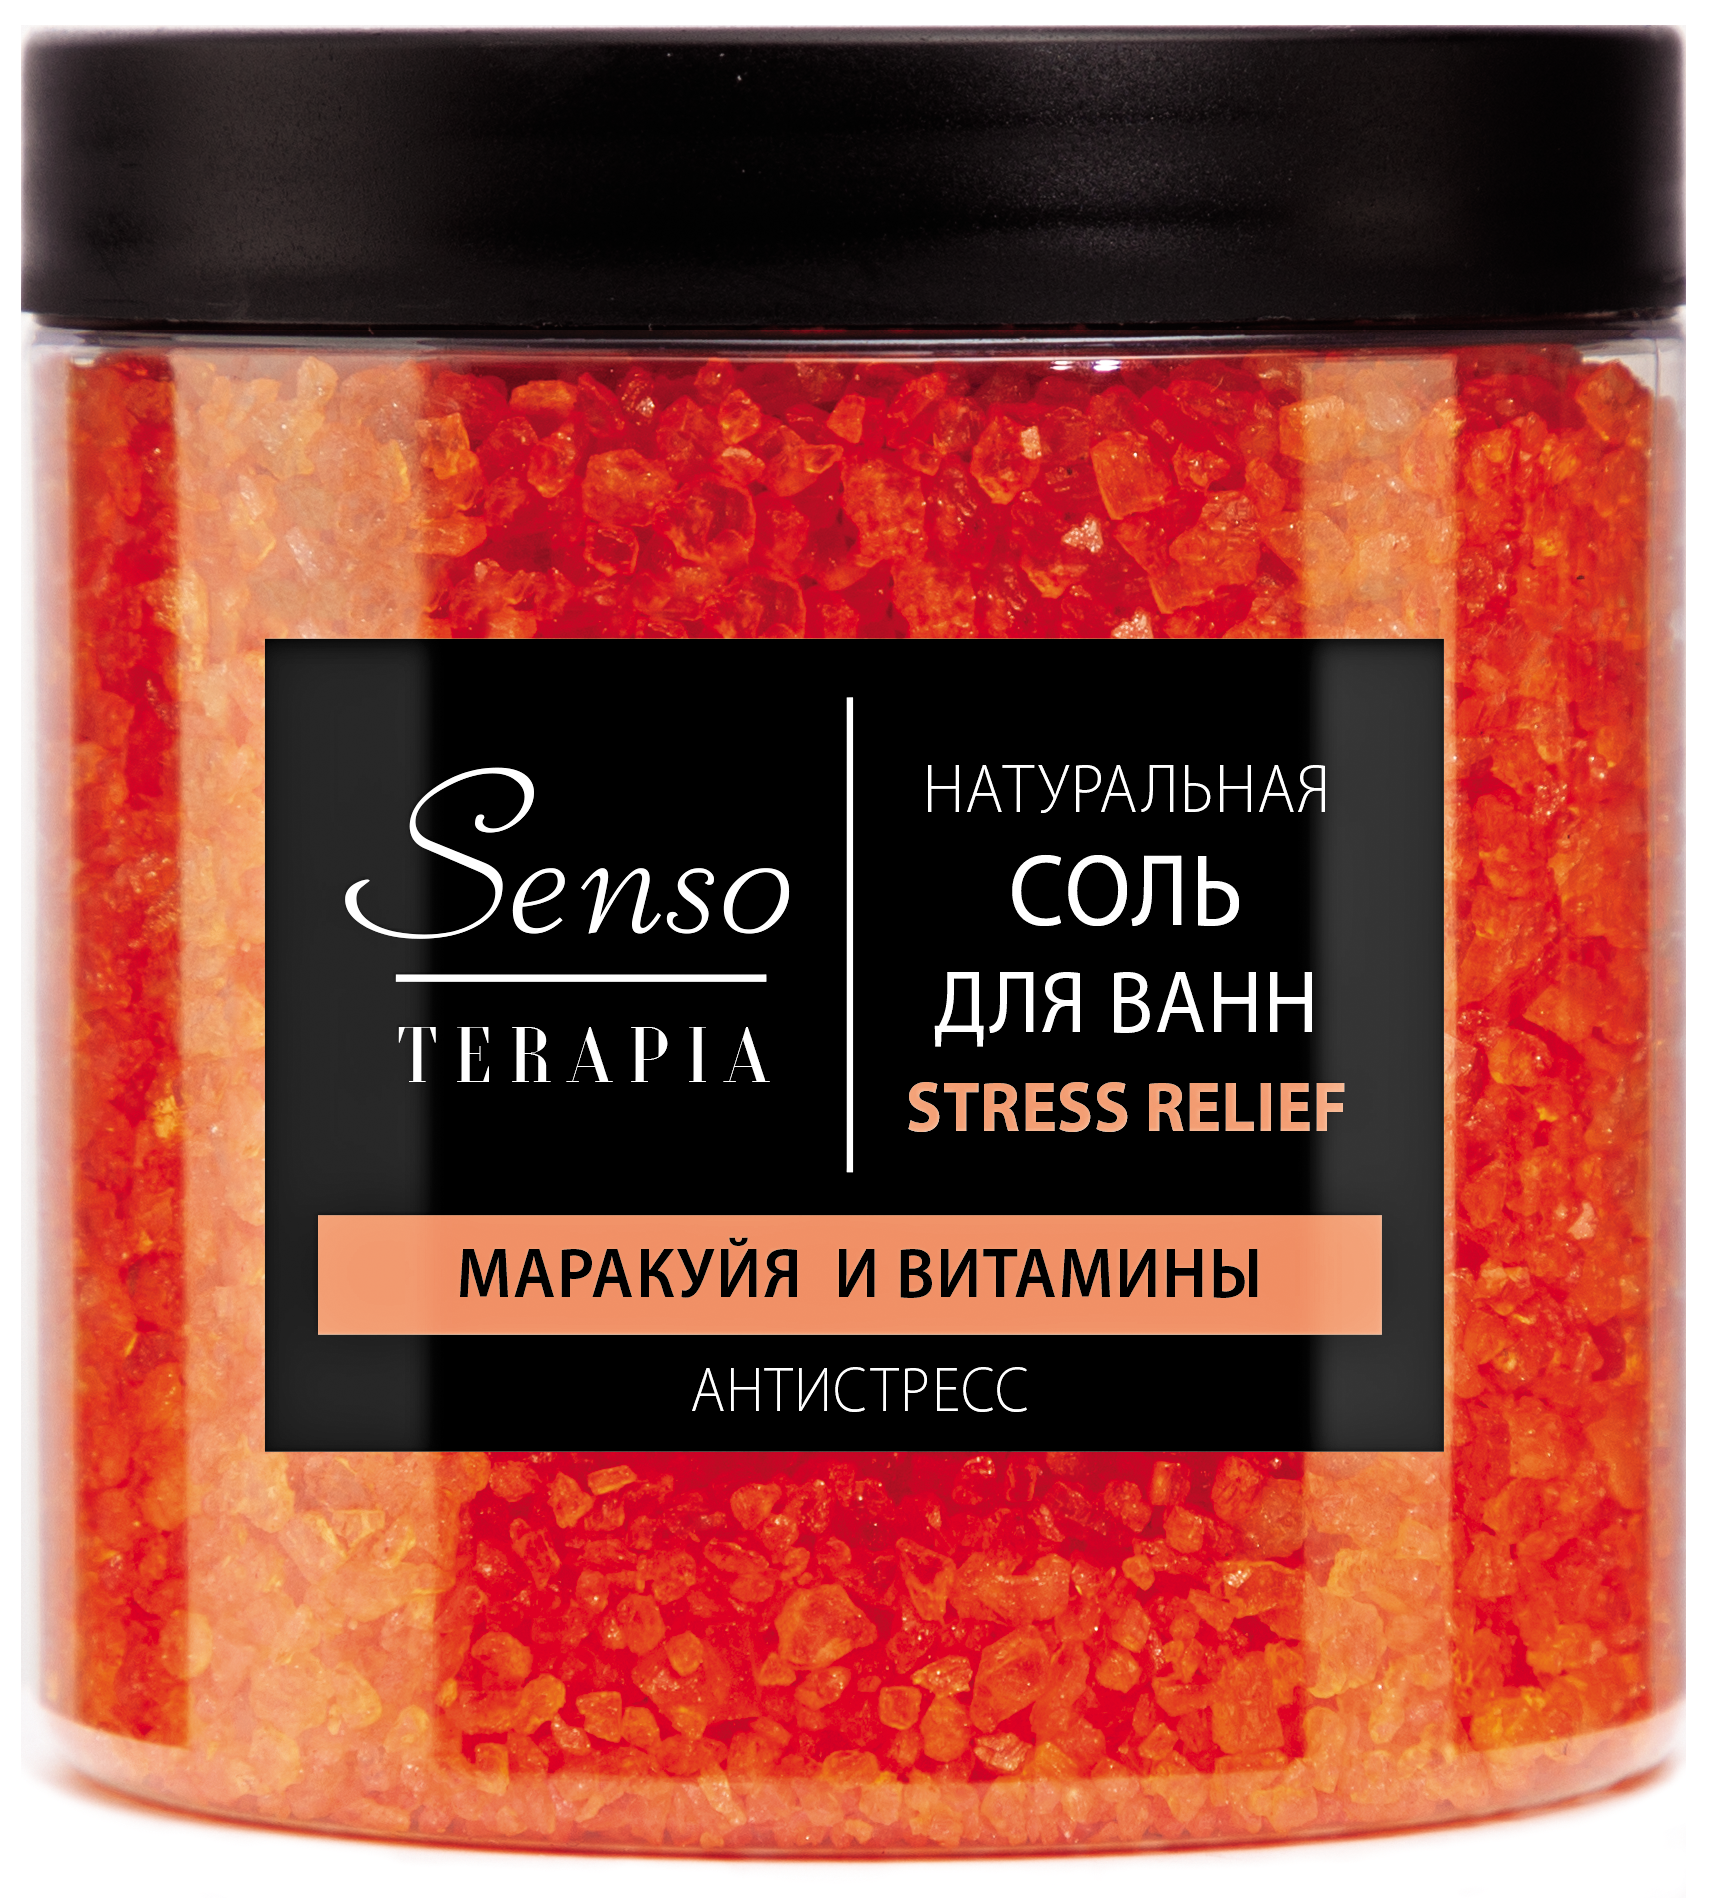 Соль для ванн Senso Terapia Stress relief 600 г антистресс - фото 7